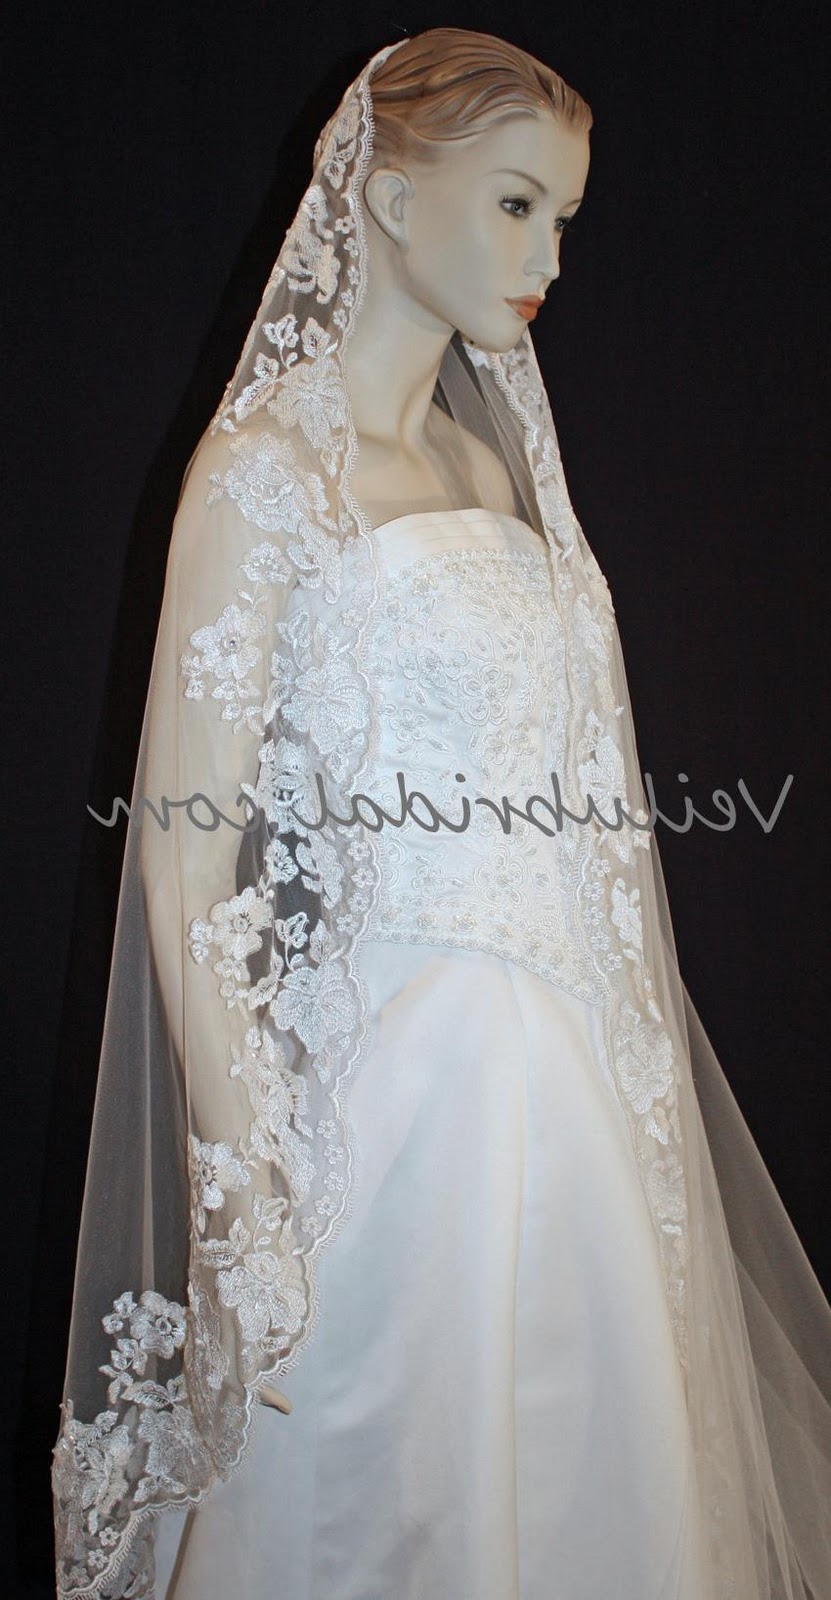 Mantilla Wedding Veils - Lace